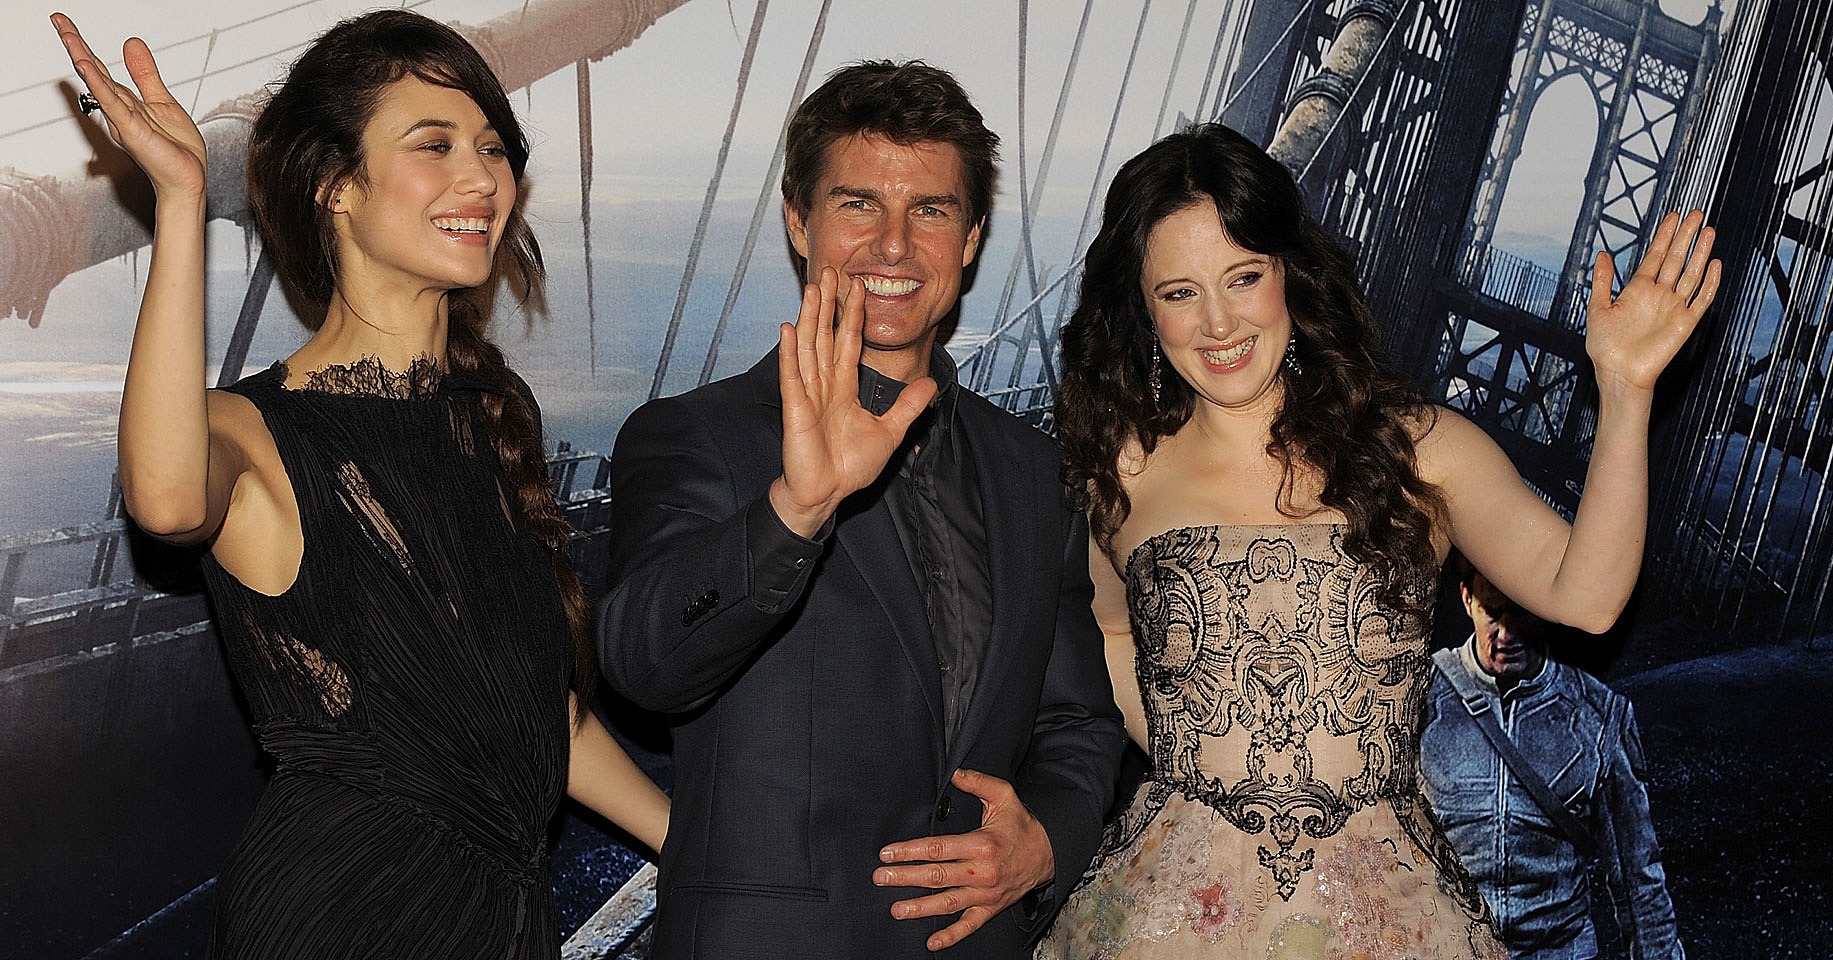 Tom Cruise At Oblivion Premiere In Buenos Aires Photos Popsugar Celebrity